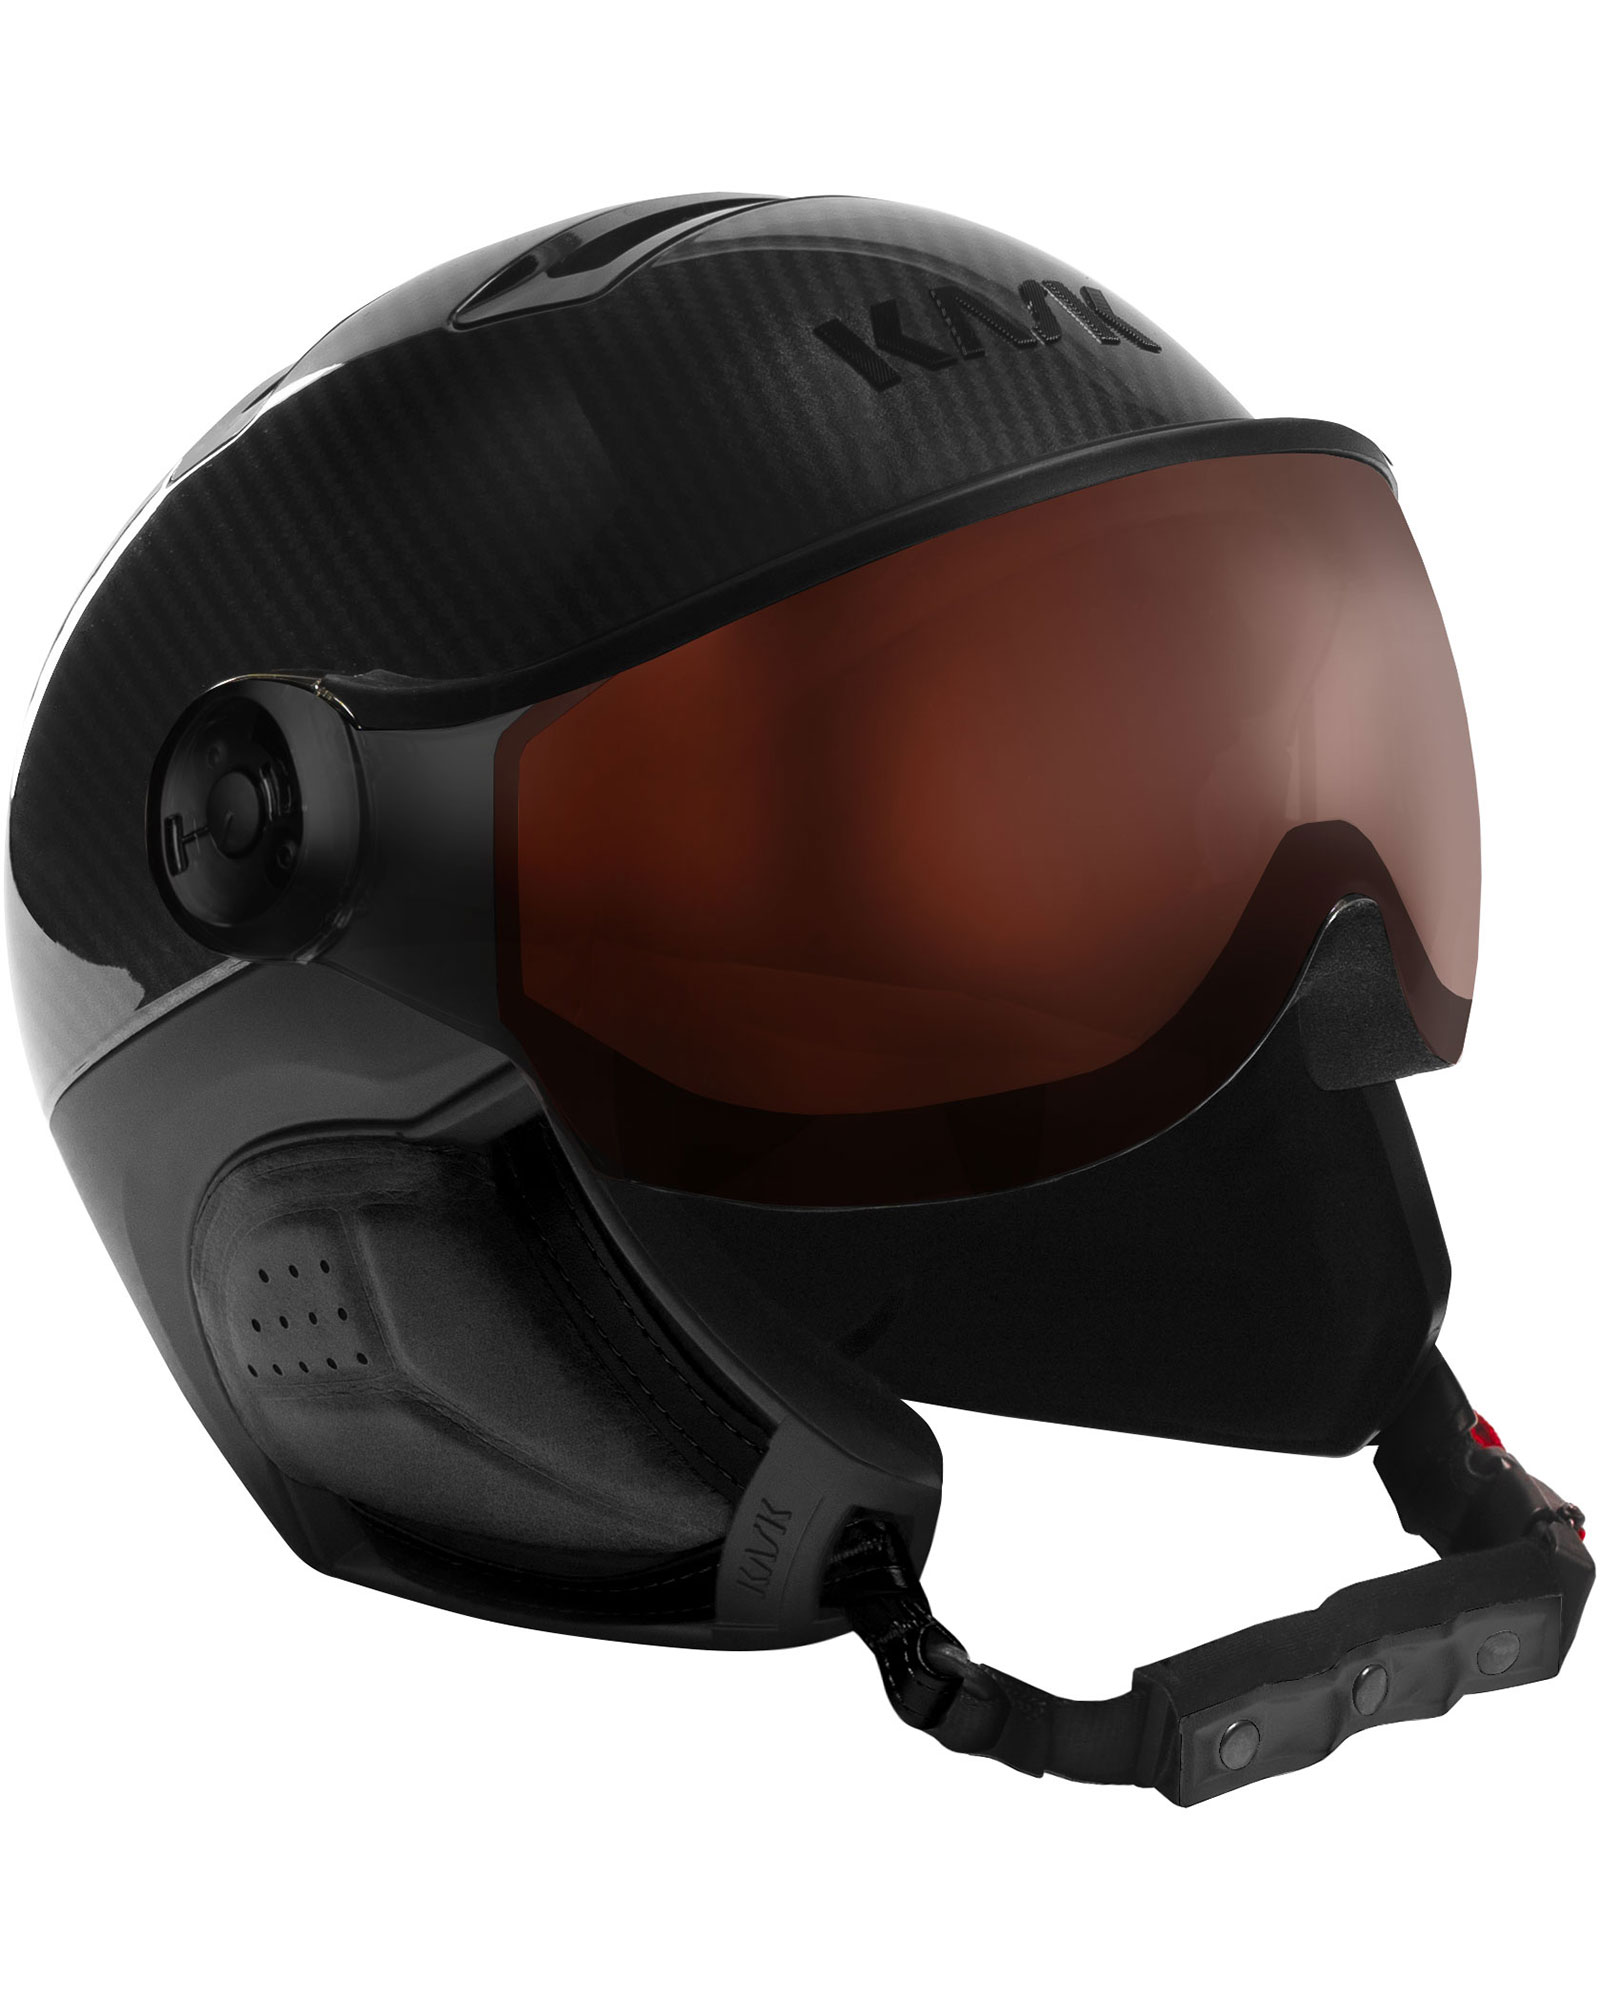 KASK Elite Pro Visor Helmet Review - Owner Reviews & Lowest Prices